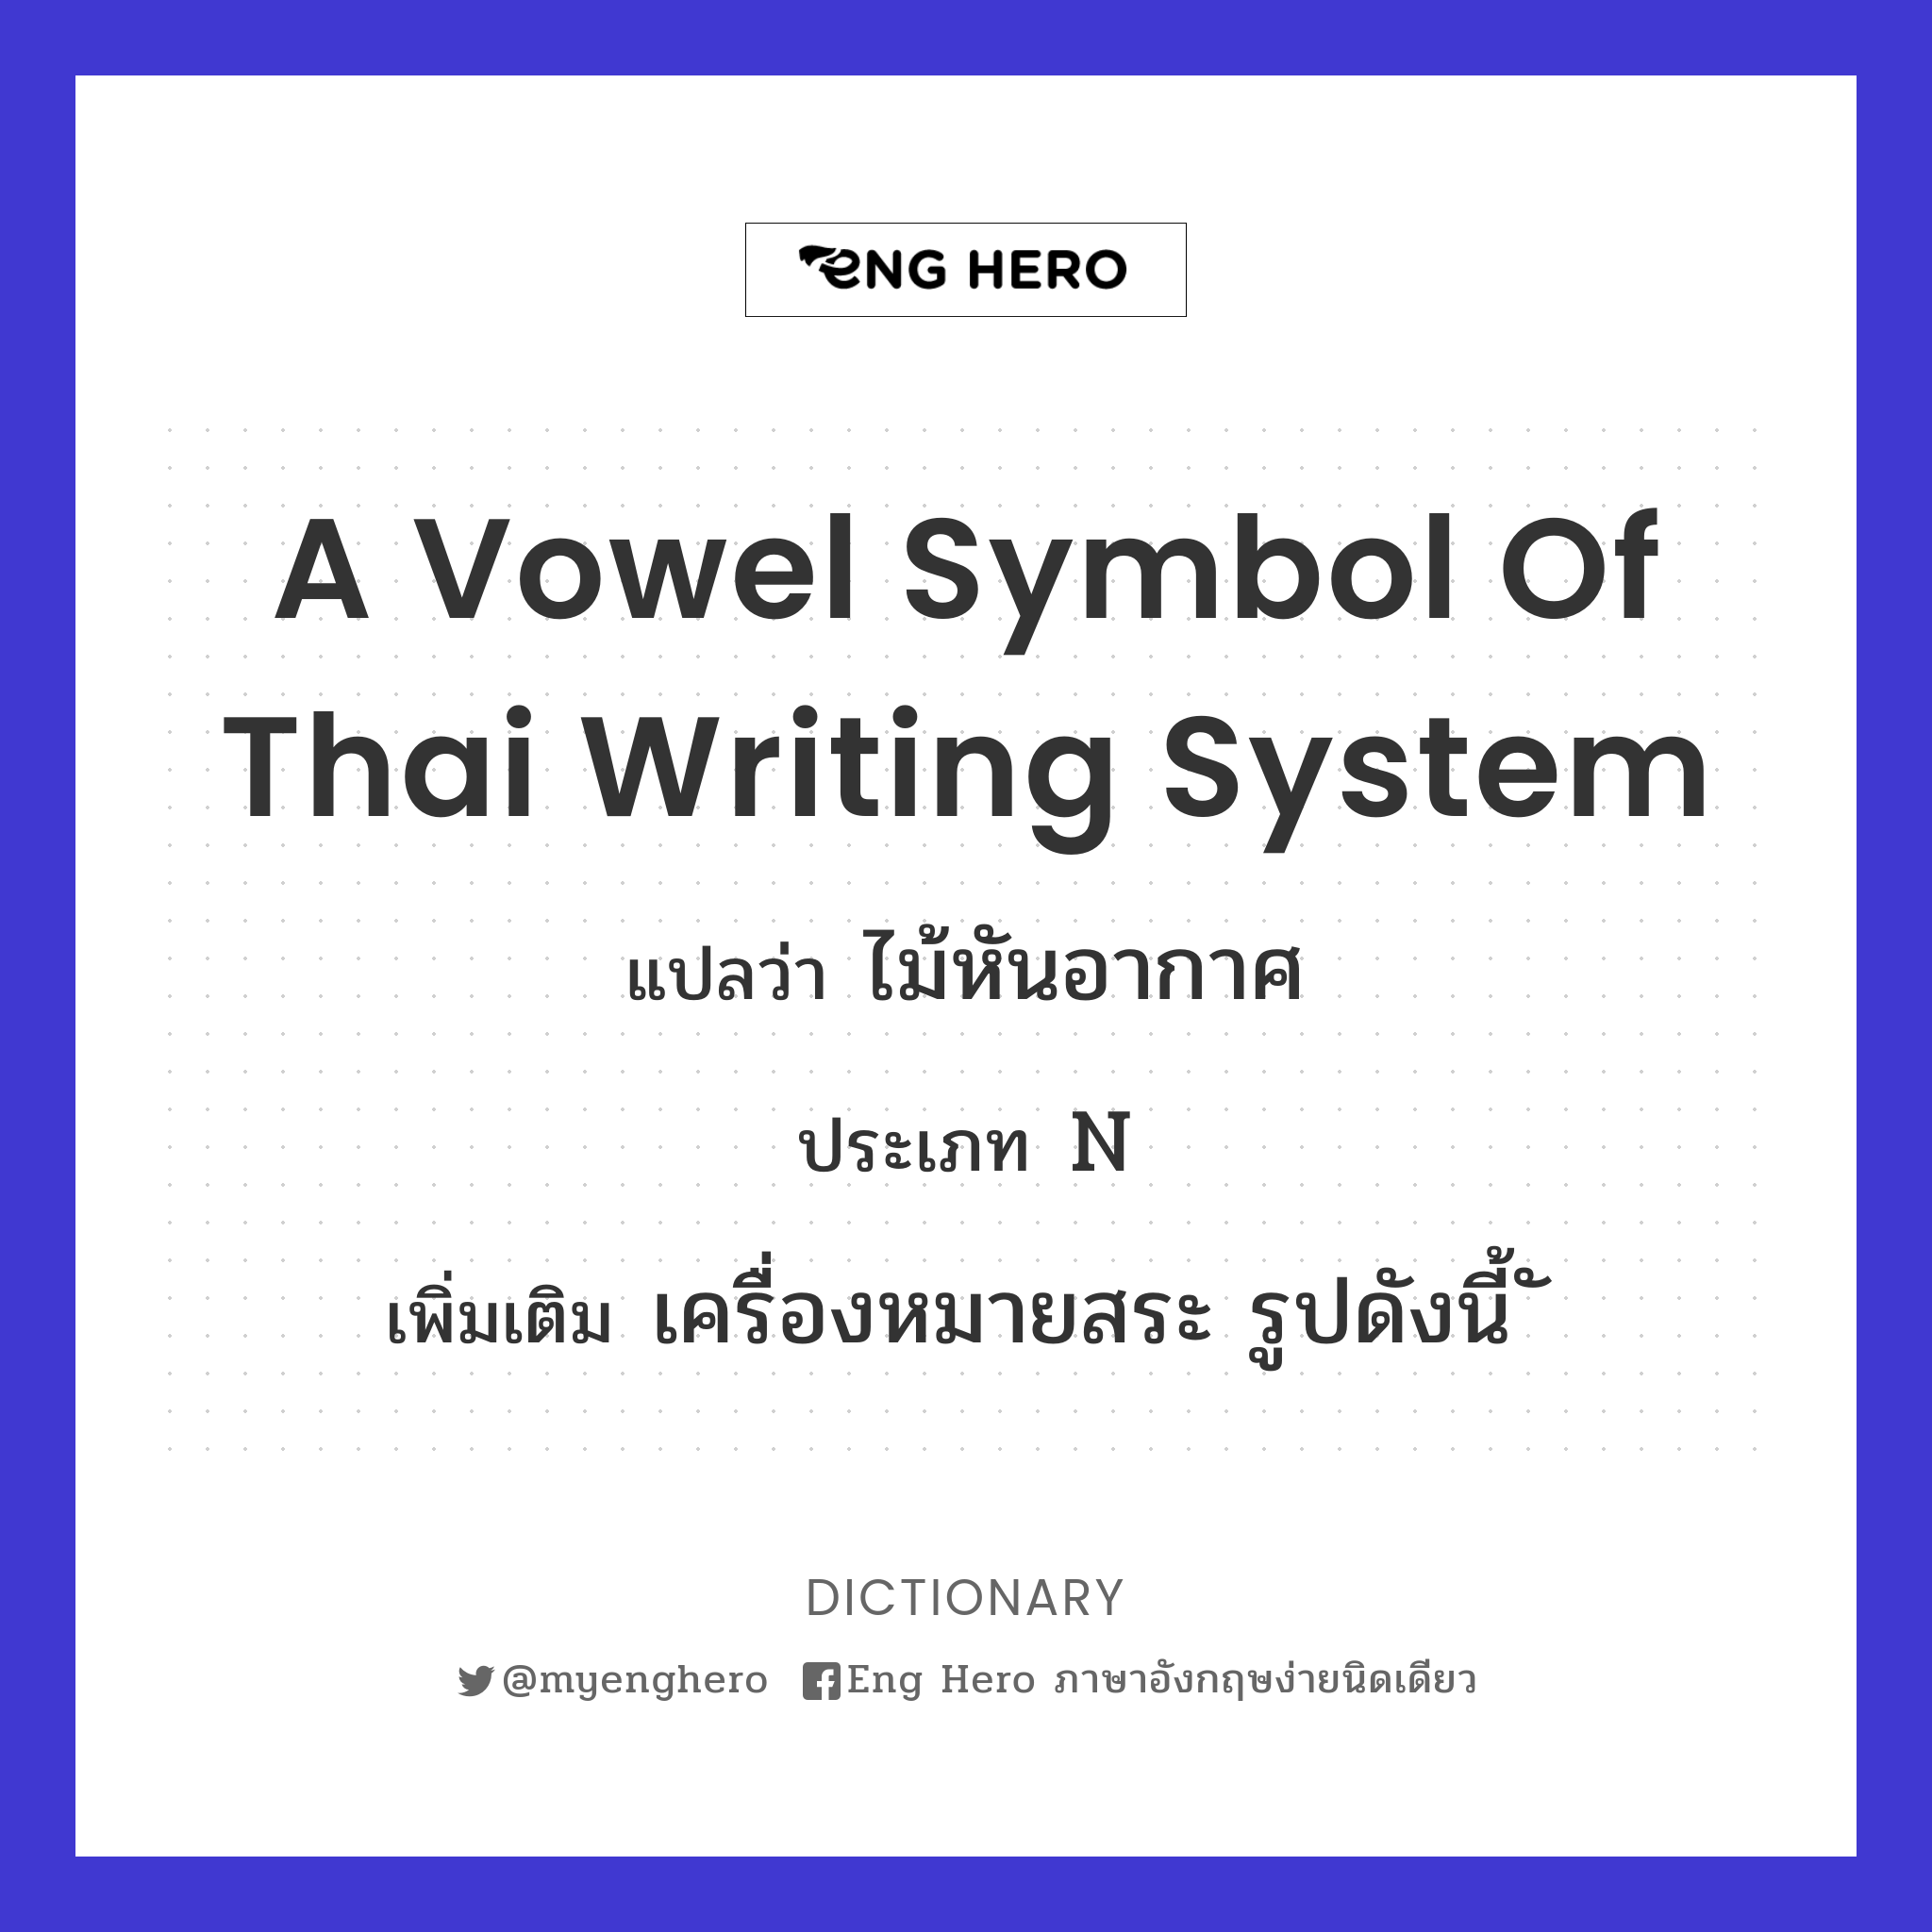 a vowel symbol of Thai writing system